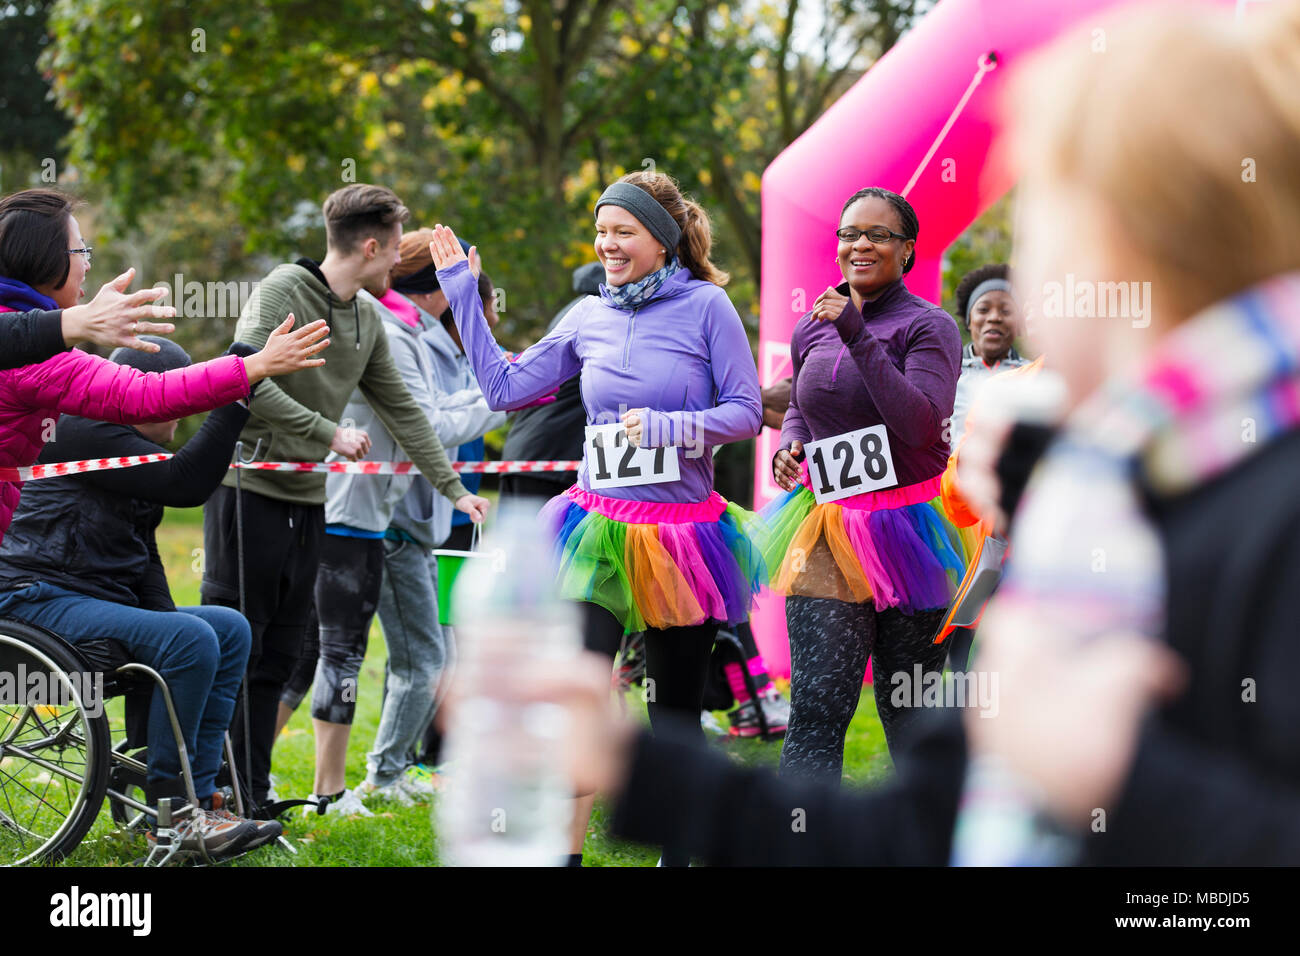 Female runners high-fiving spectators at charity run finish line Stock Photo